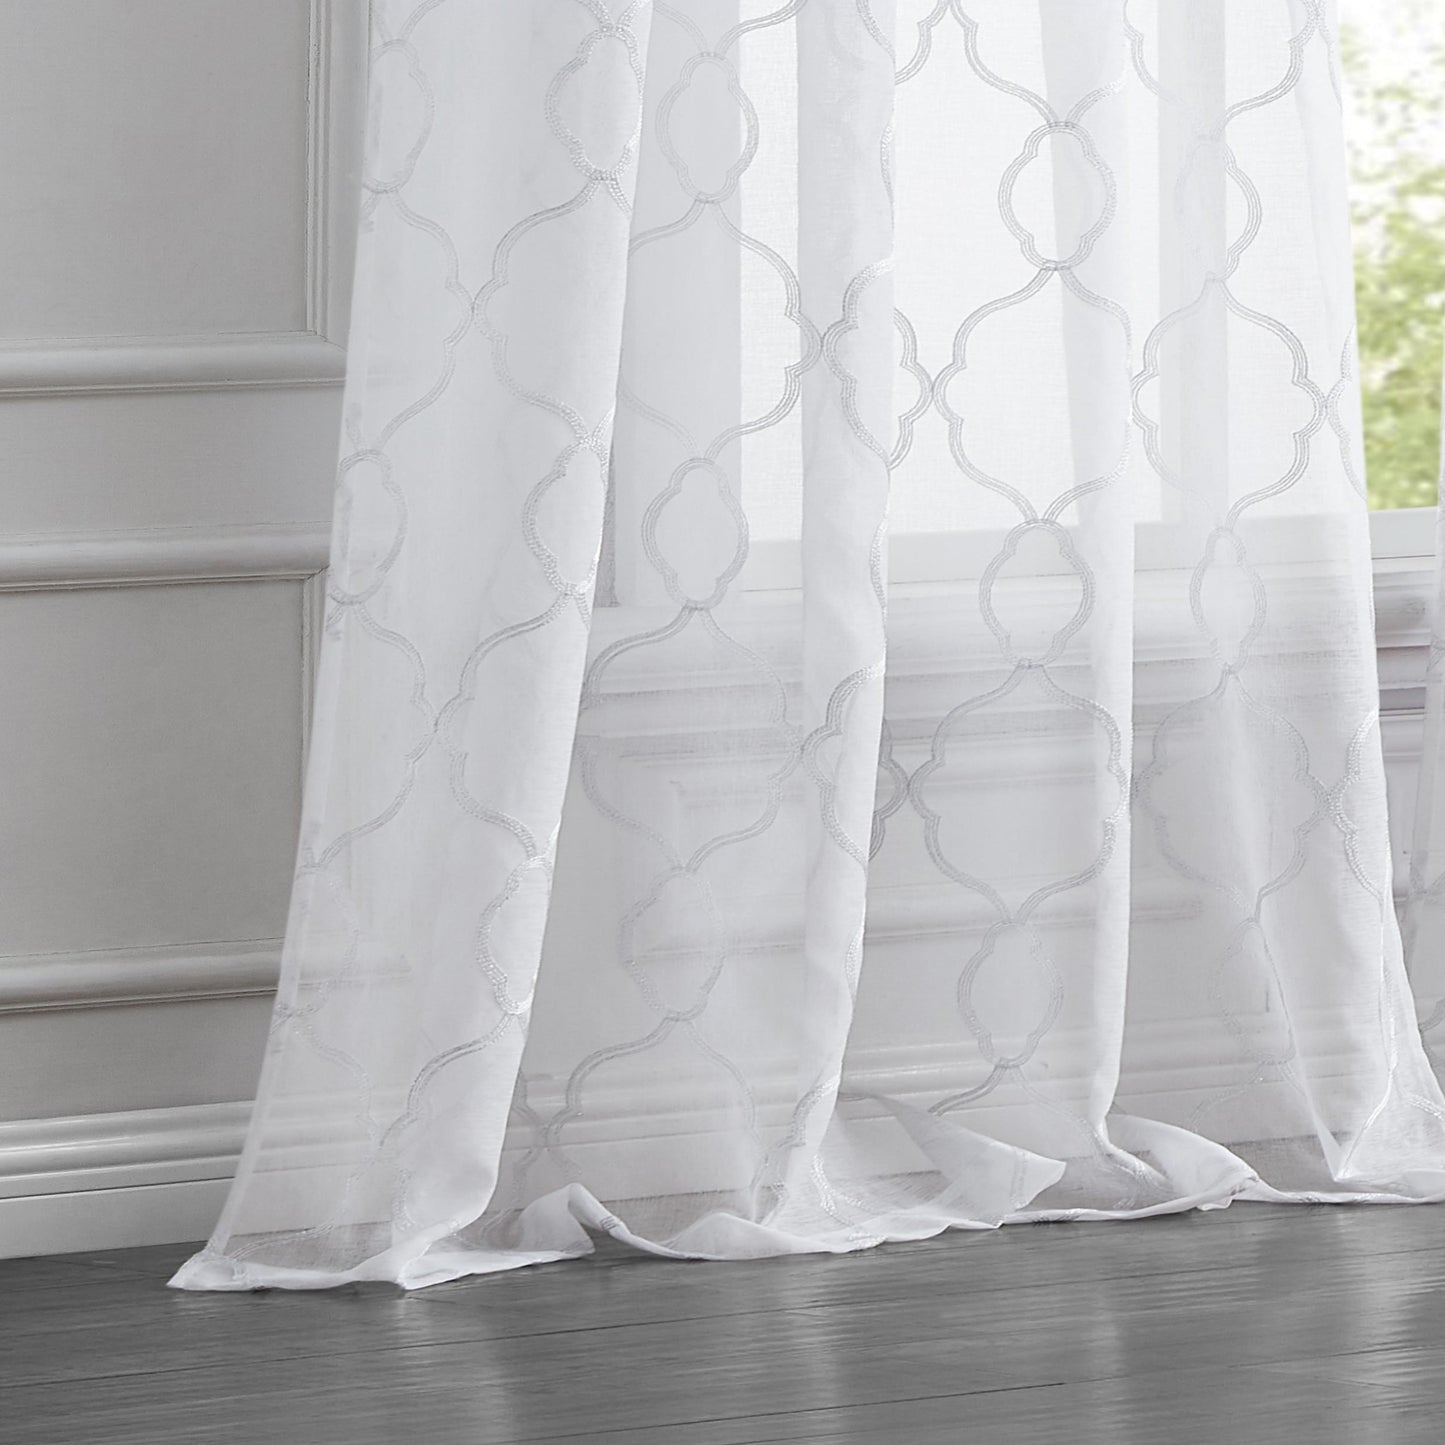 84” White Trellis Pattern Embroidered Window Curtain Panel